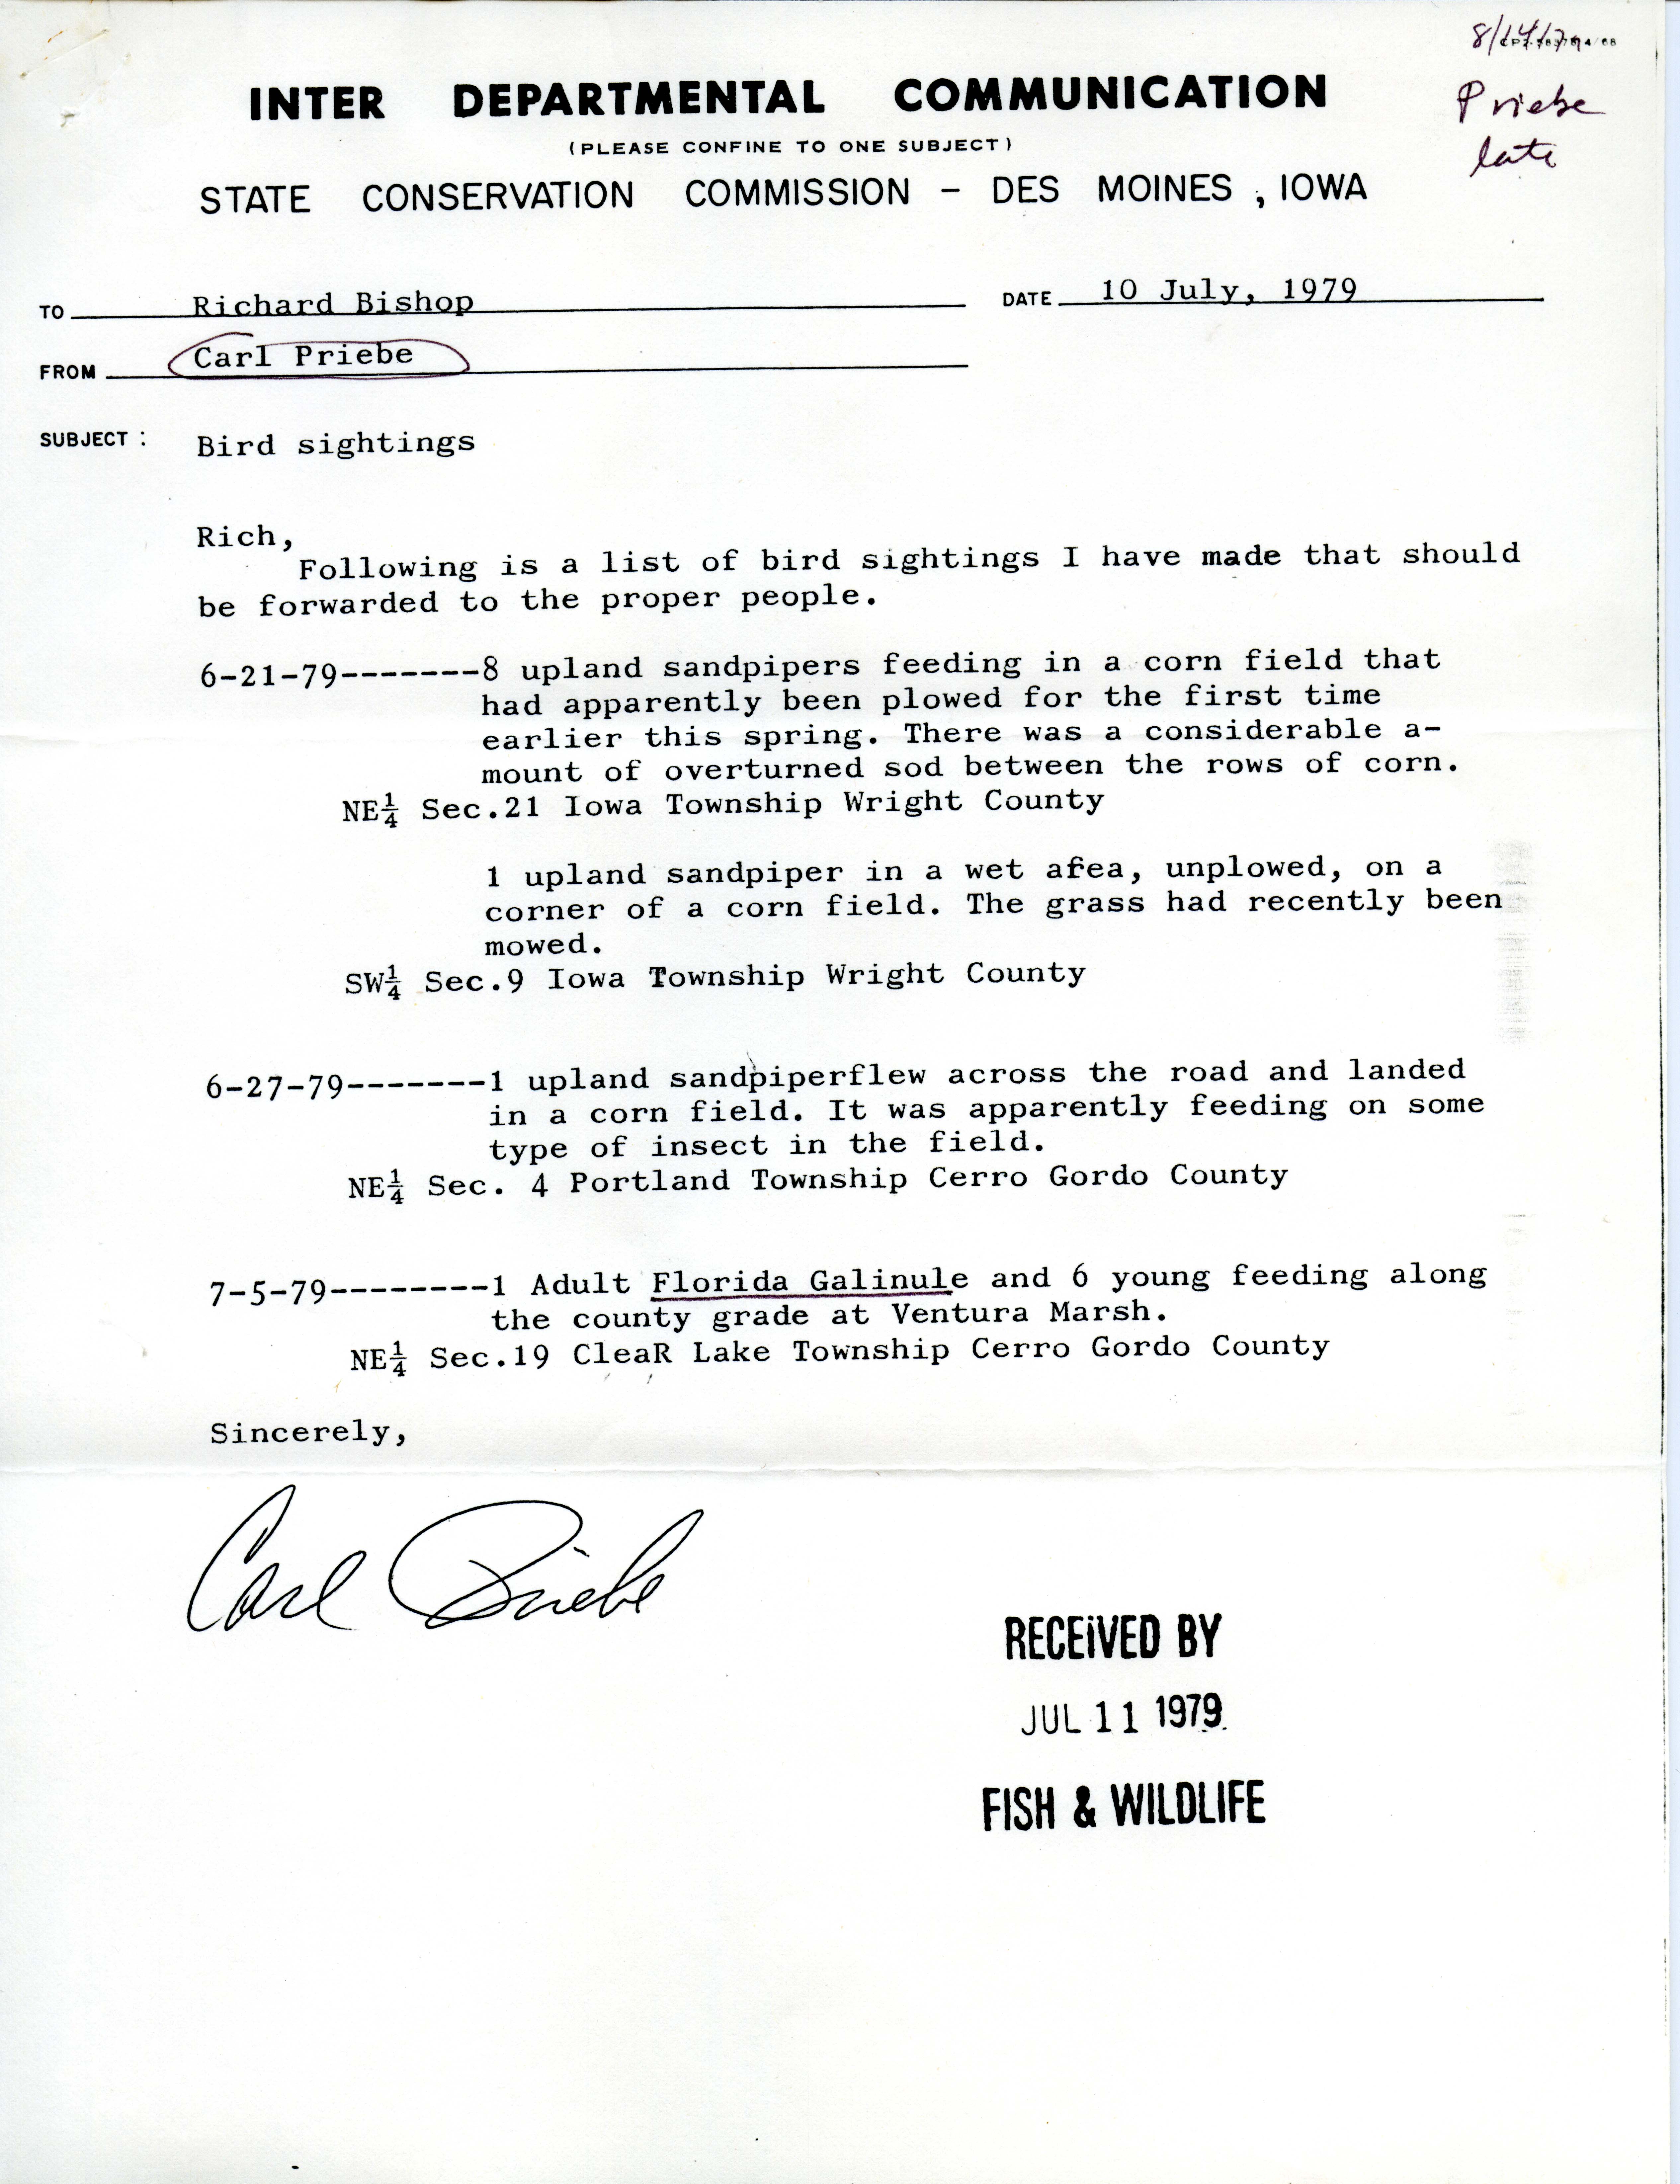 Carl Priebe letter to Richard Bishop regarding bird sightings, July 10, 1979 